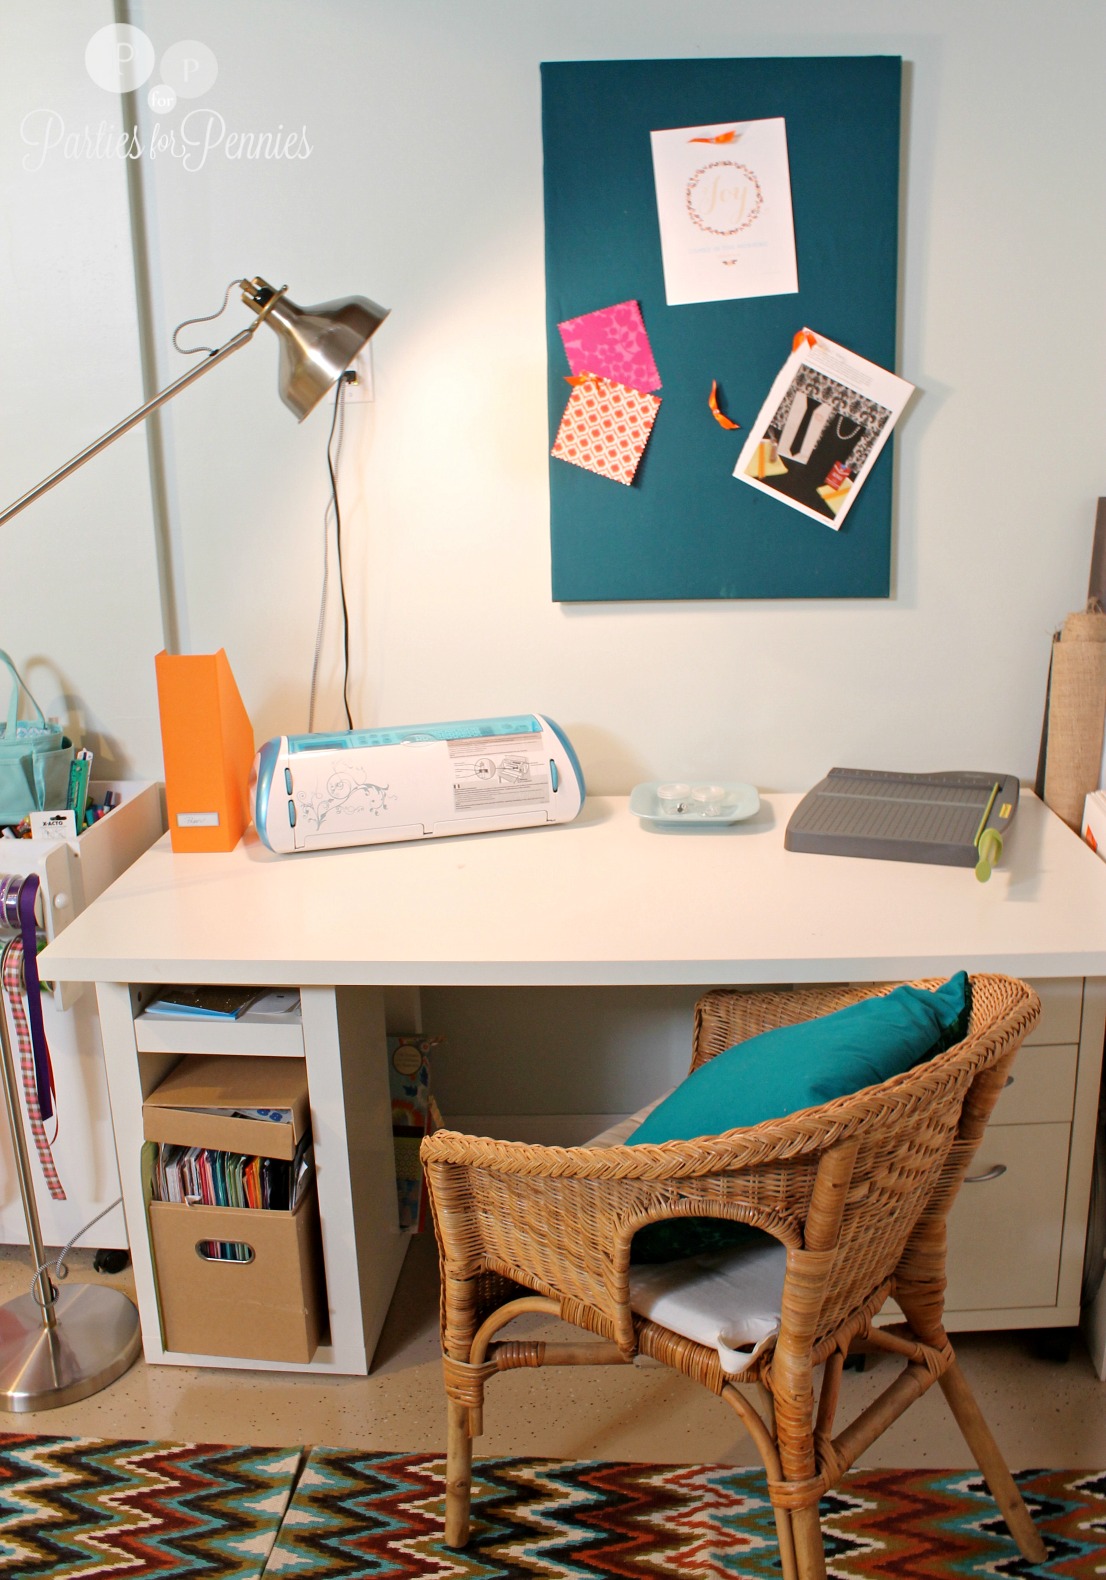 Craft Room Organization - Desk area by PartiesforPennies.com